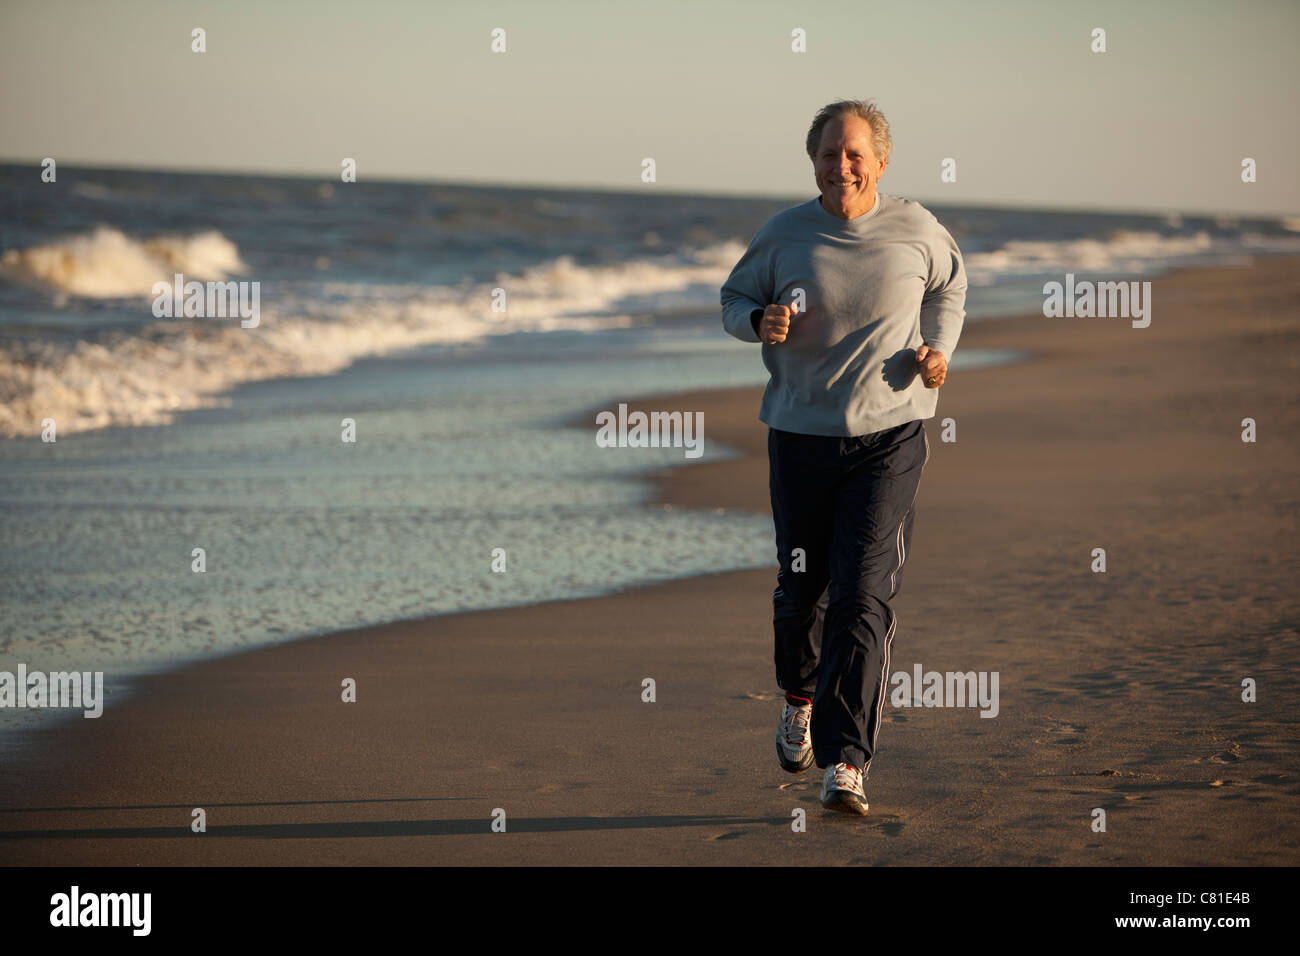 Man running on beach Banque D'Images